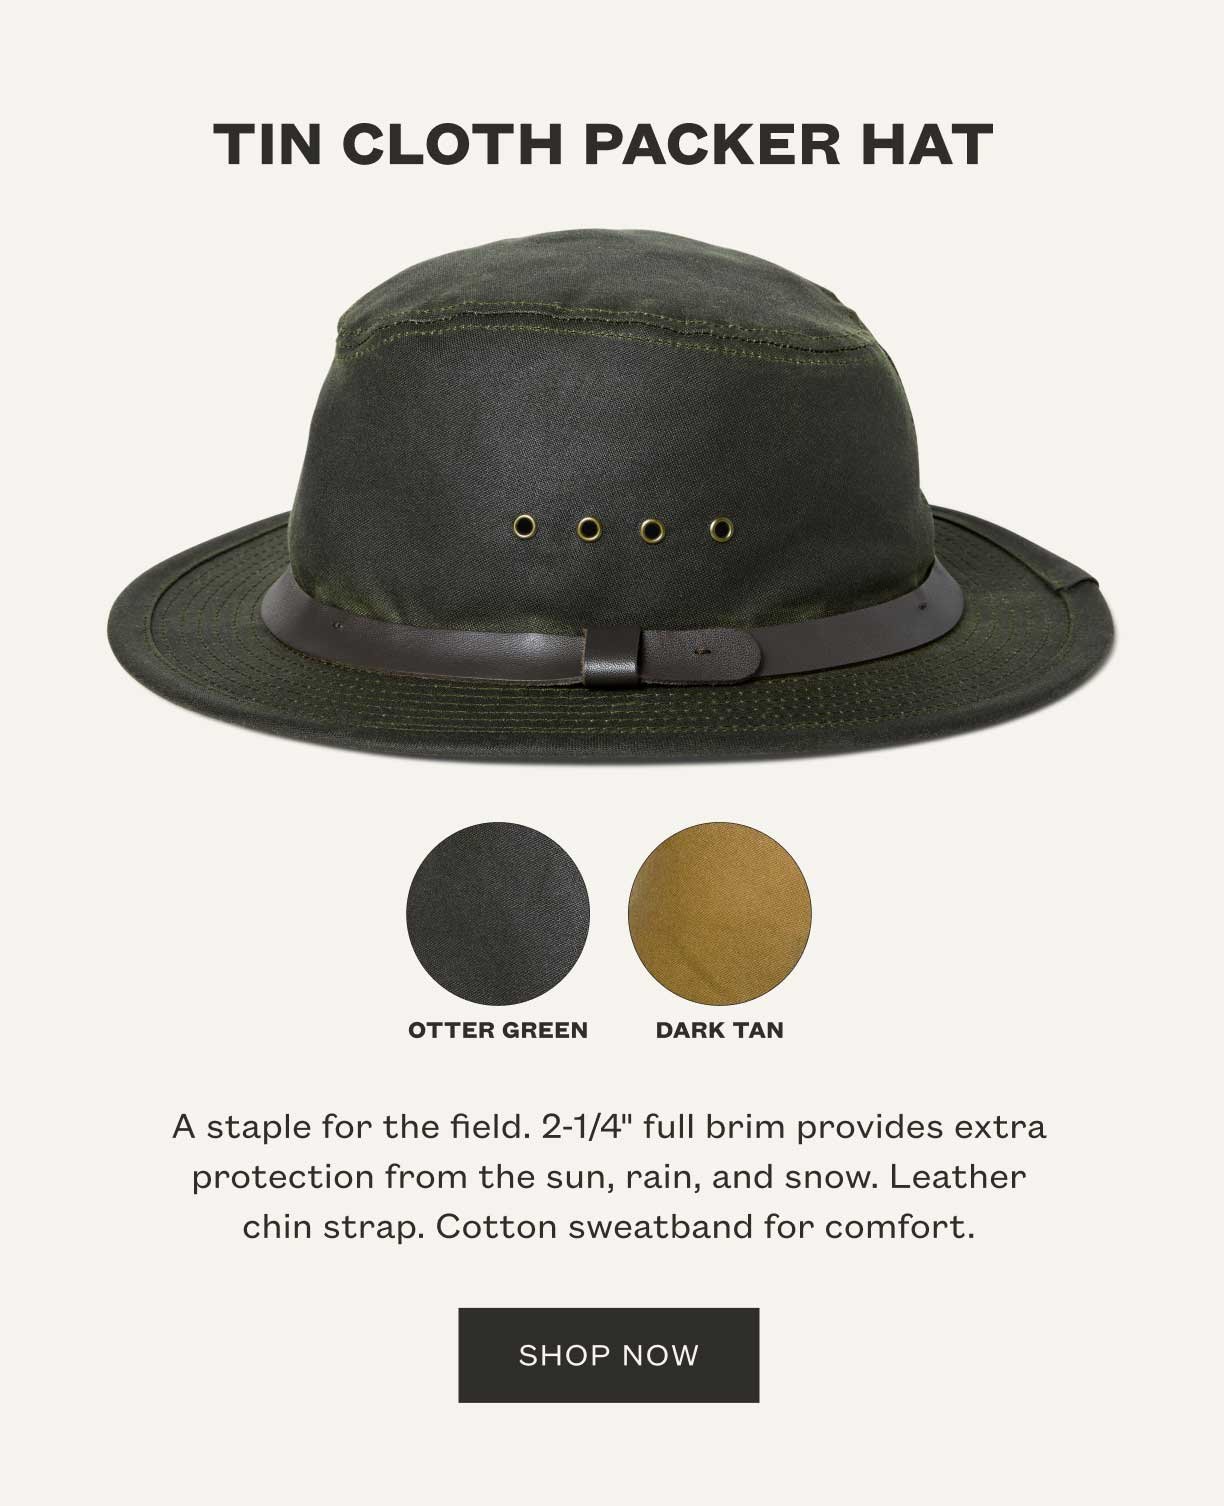 Tin Cloth Packer Hat